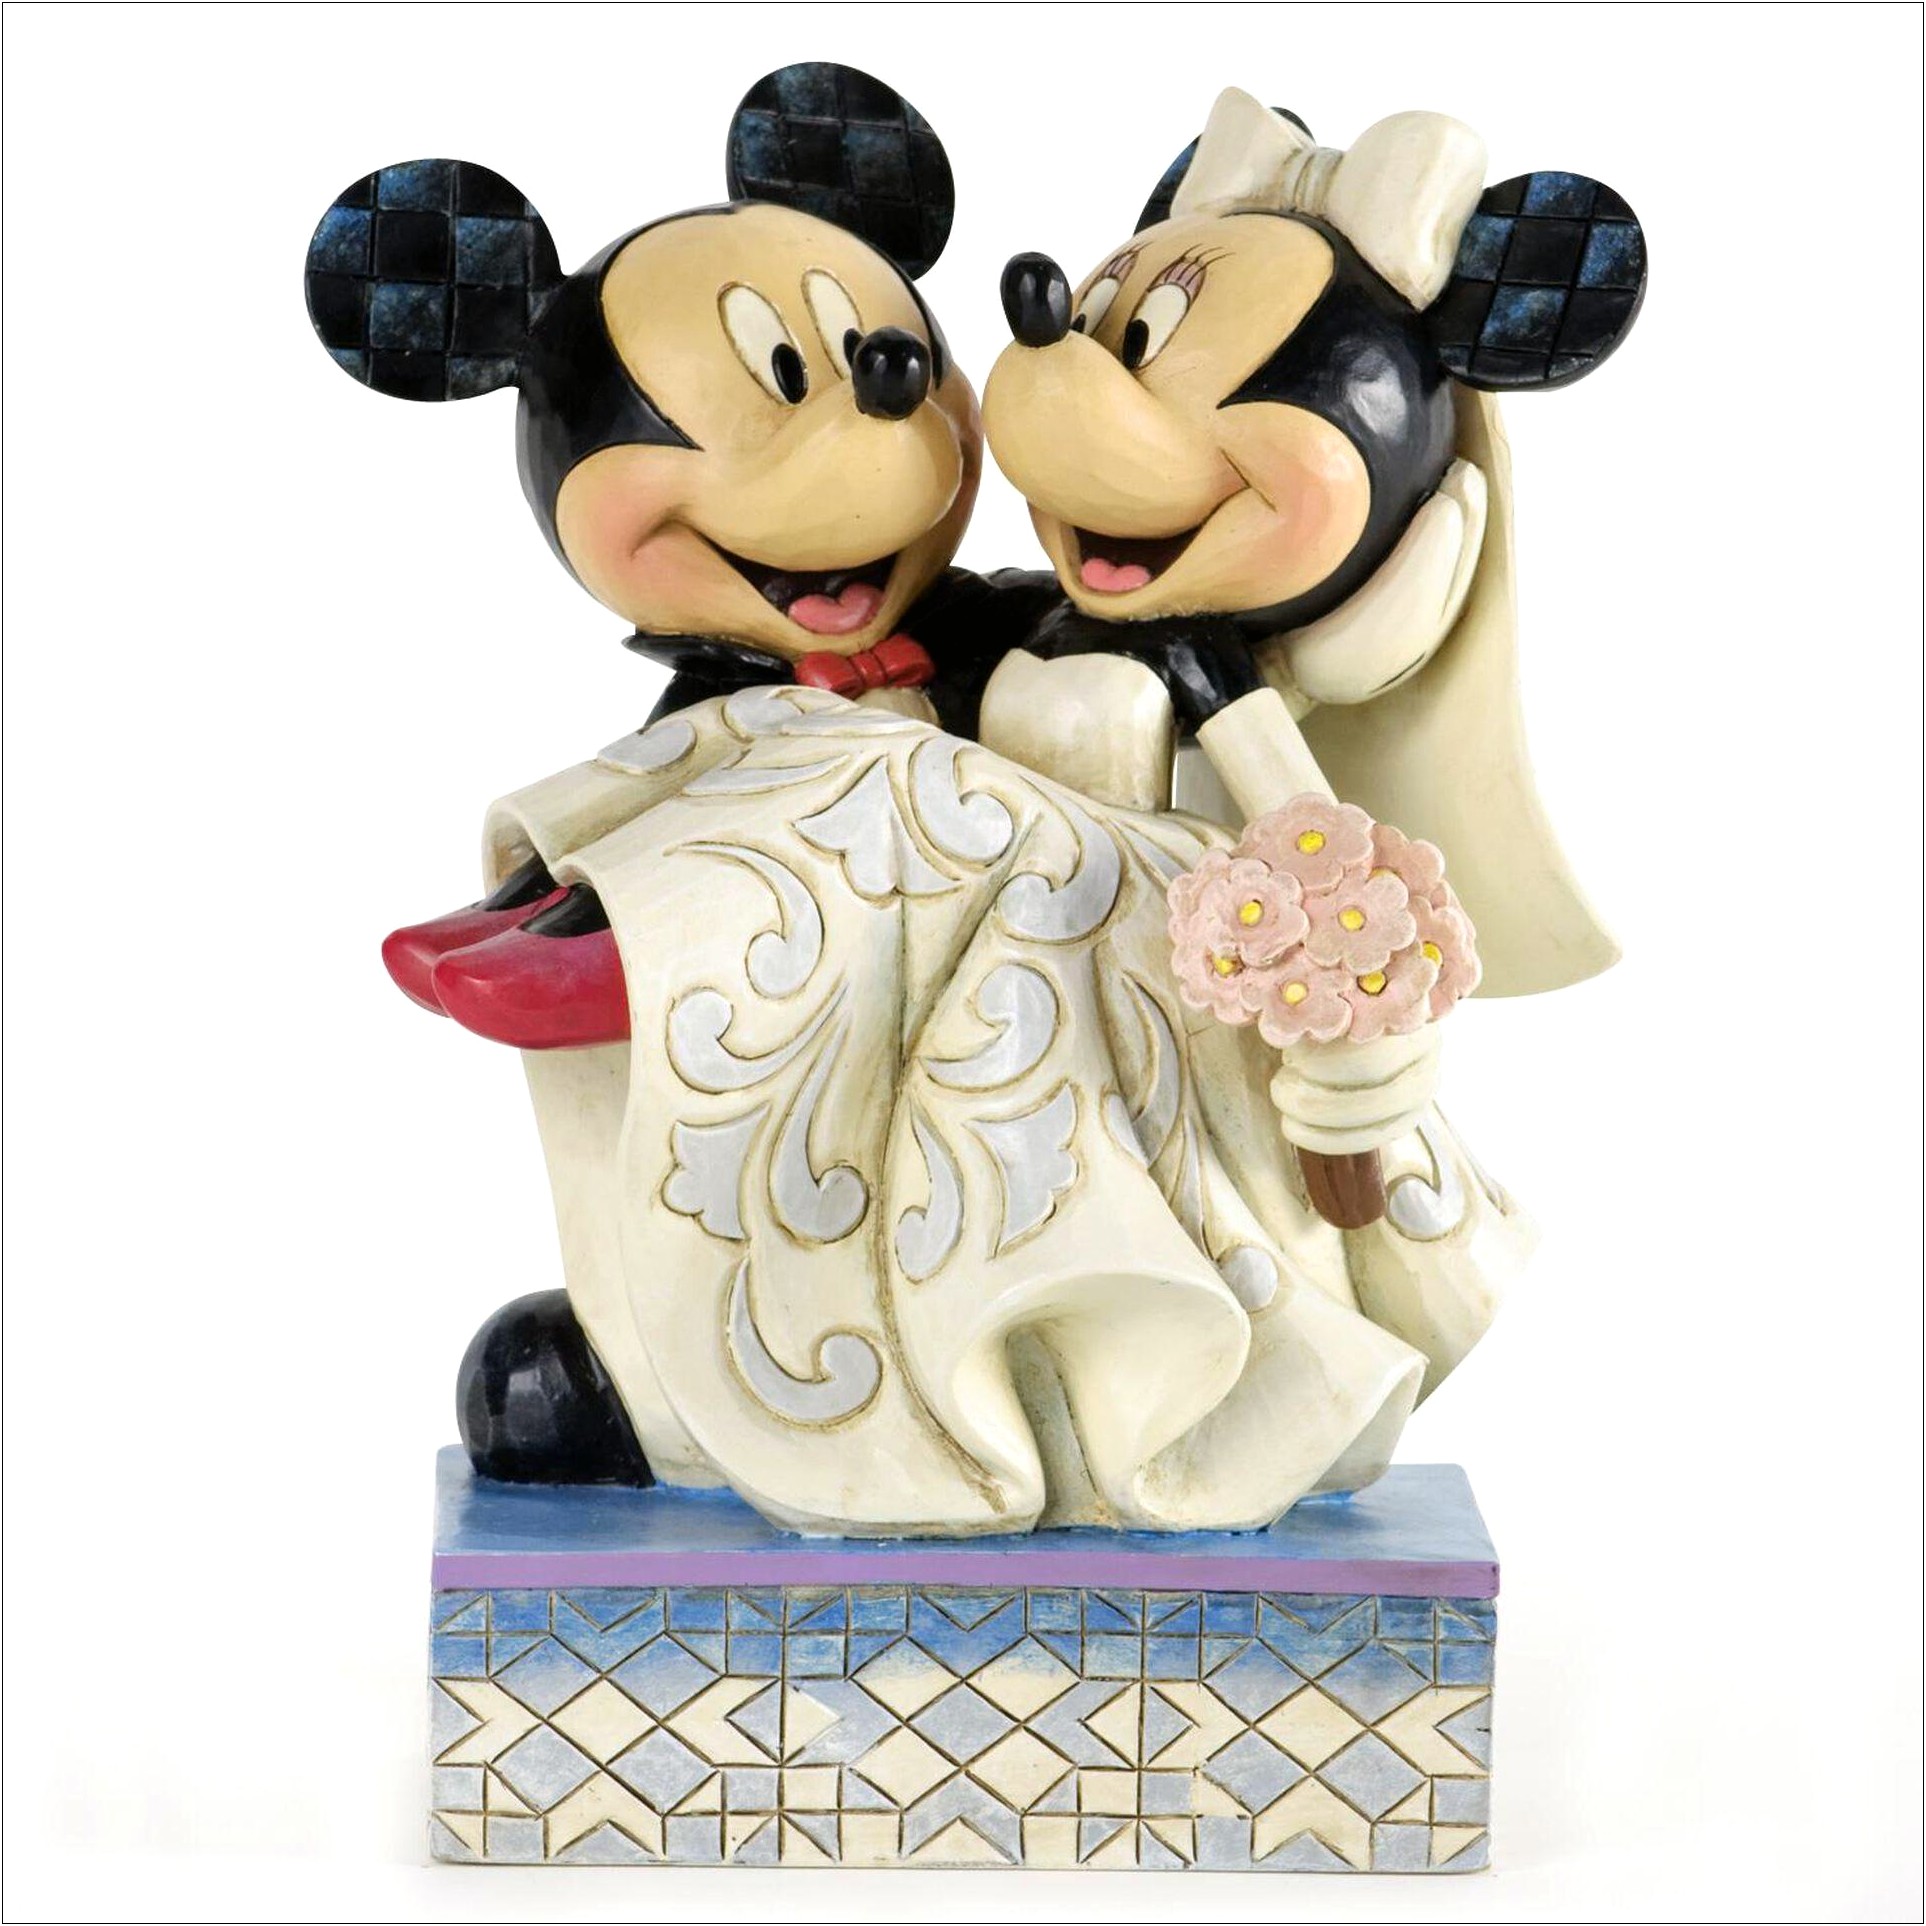 Send Mickey And Minnie A Wedding Invitation